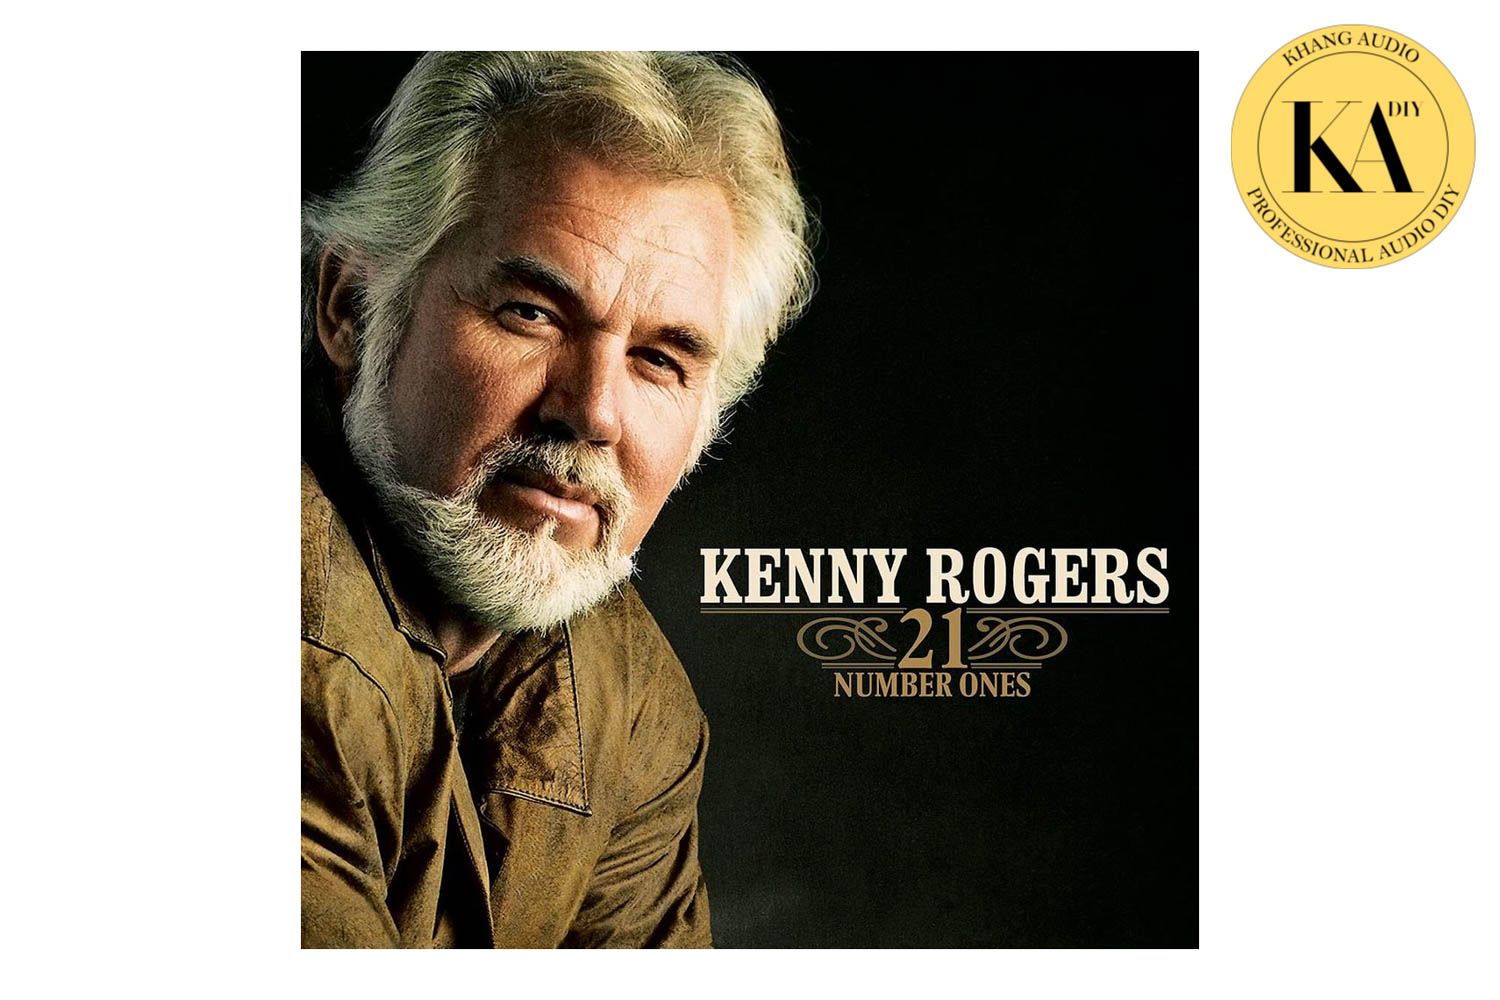 LP 21 Number Ones - Kenny Rogers